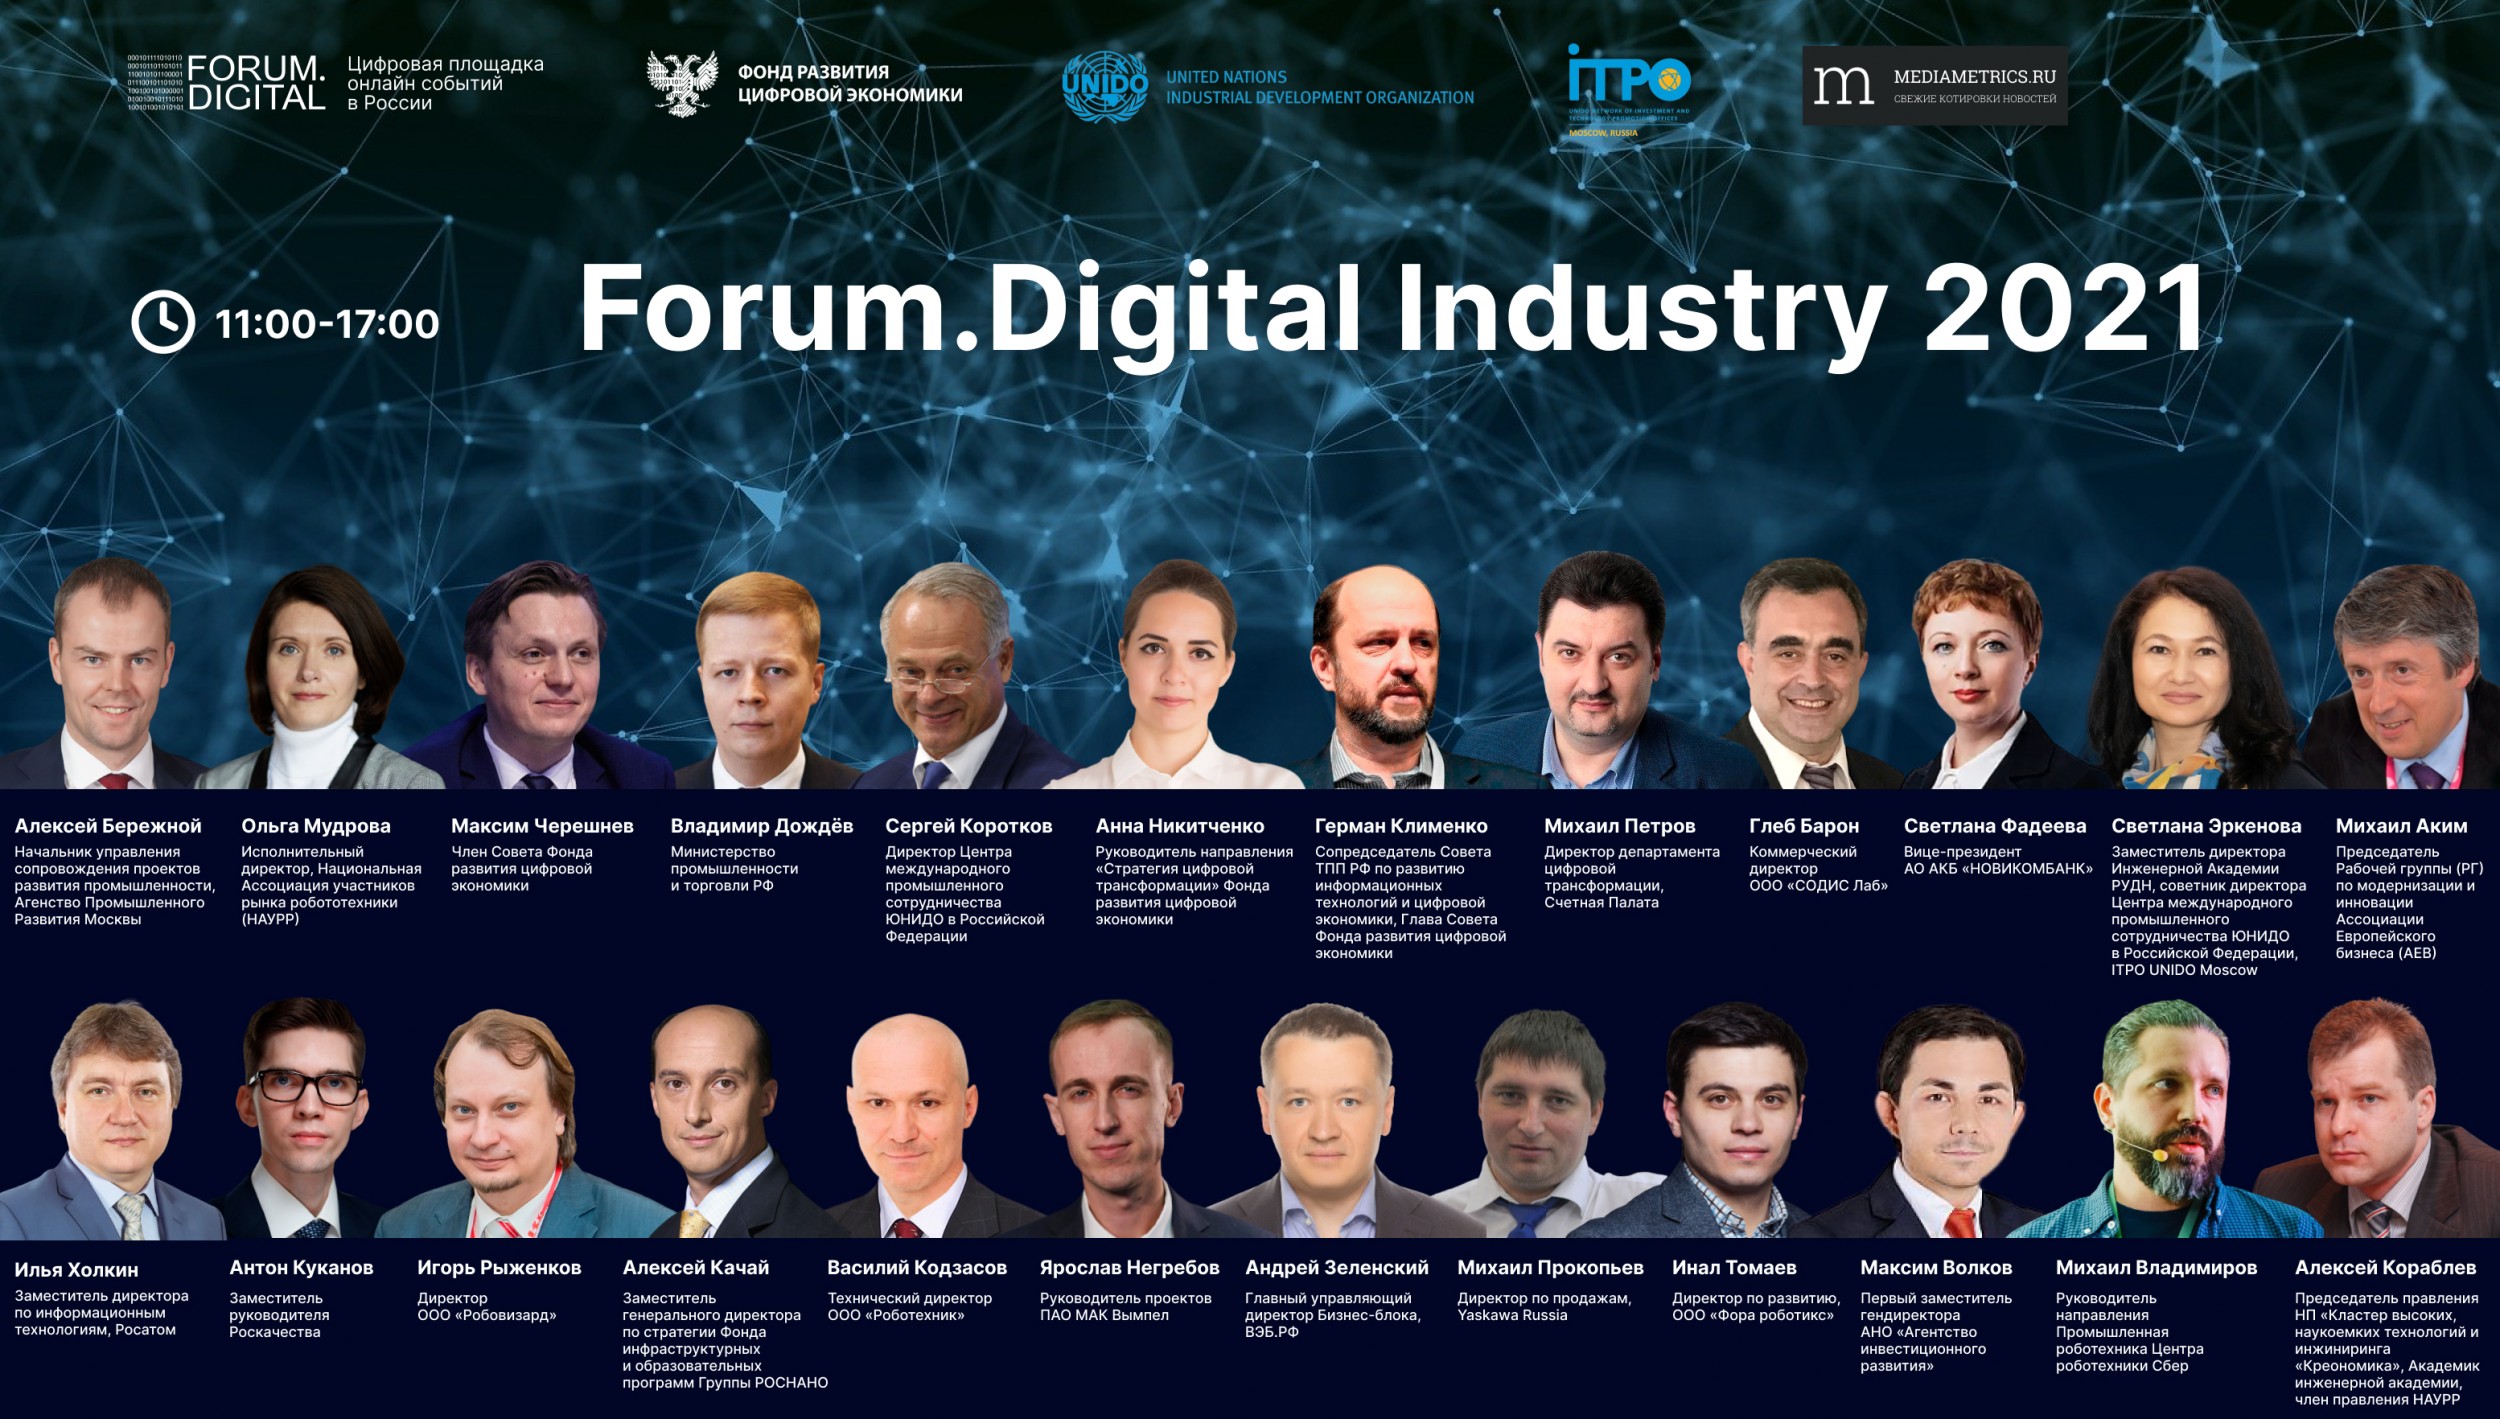 II   - Forum.Digital Industry 2021